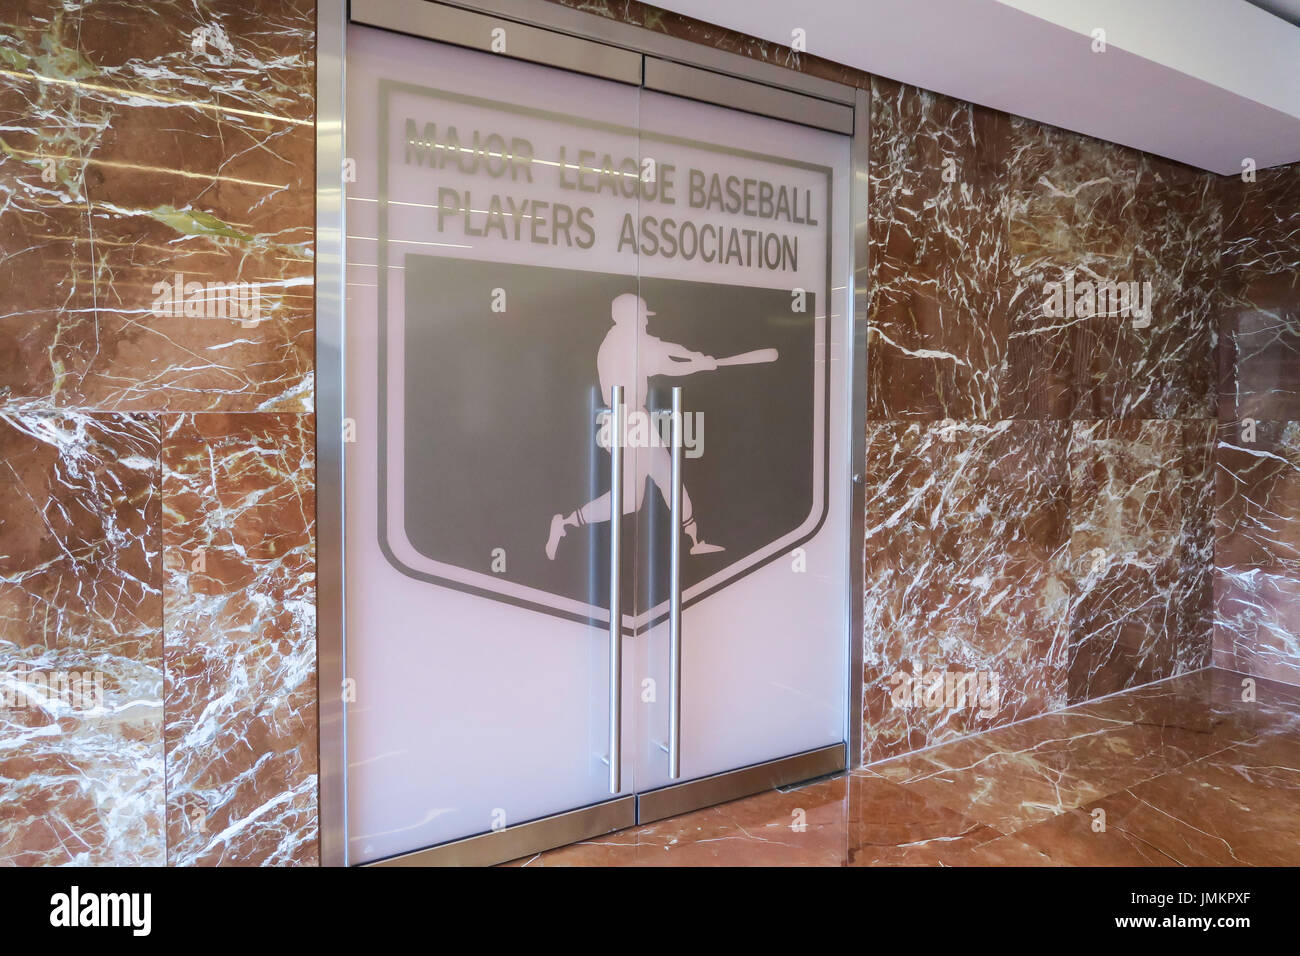 Büros pf Major League Baseball Players Association, New York, USA Stockfoto